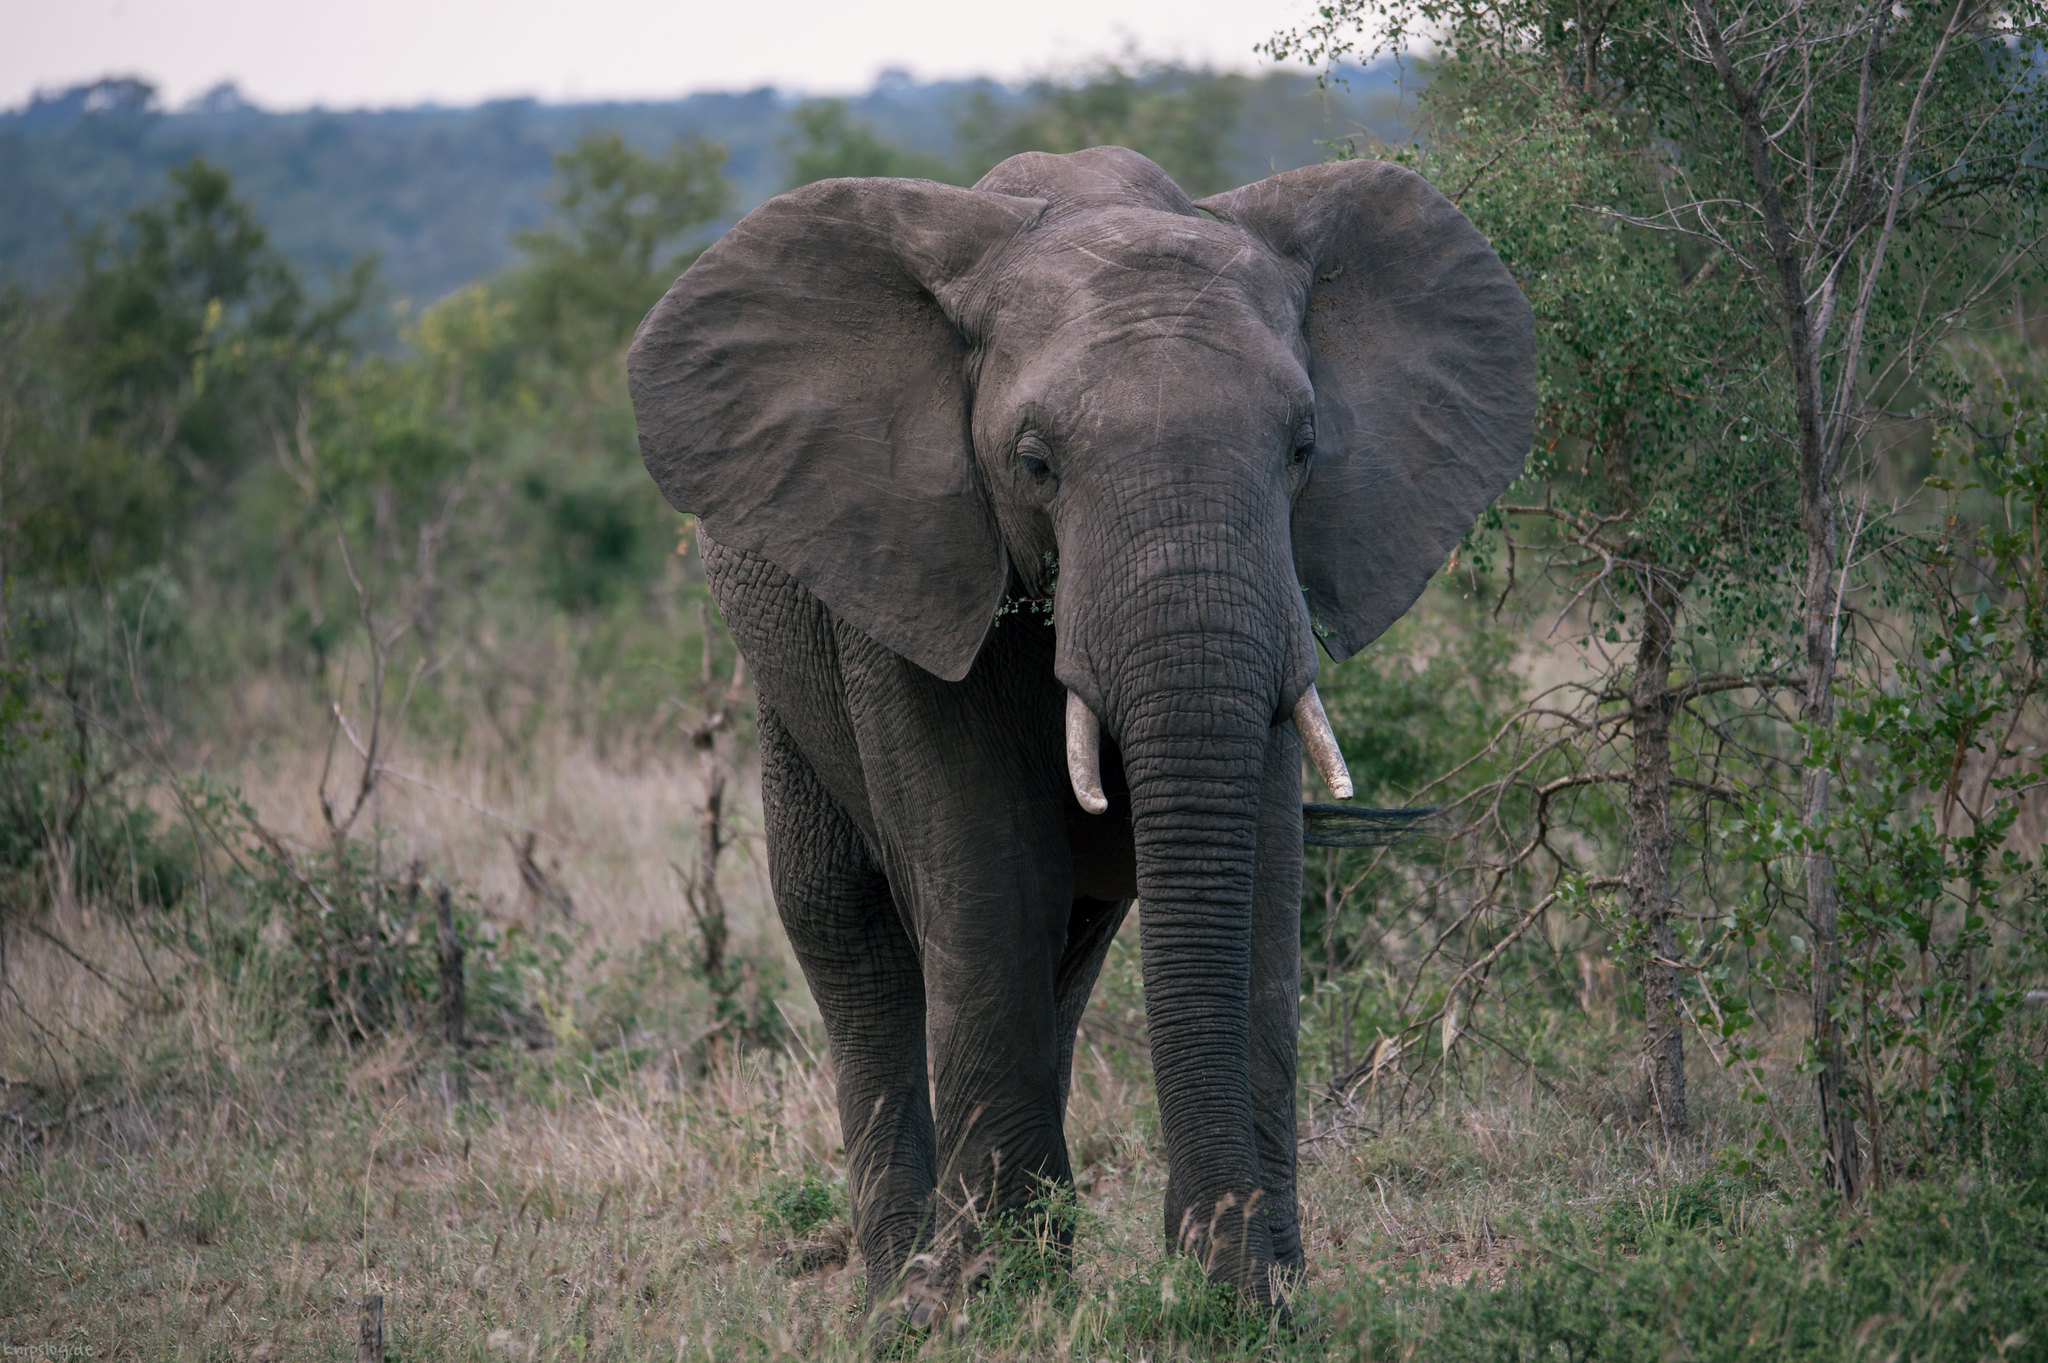 Adult elephant